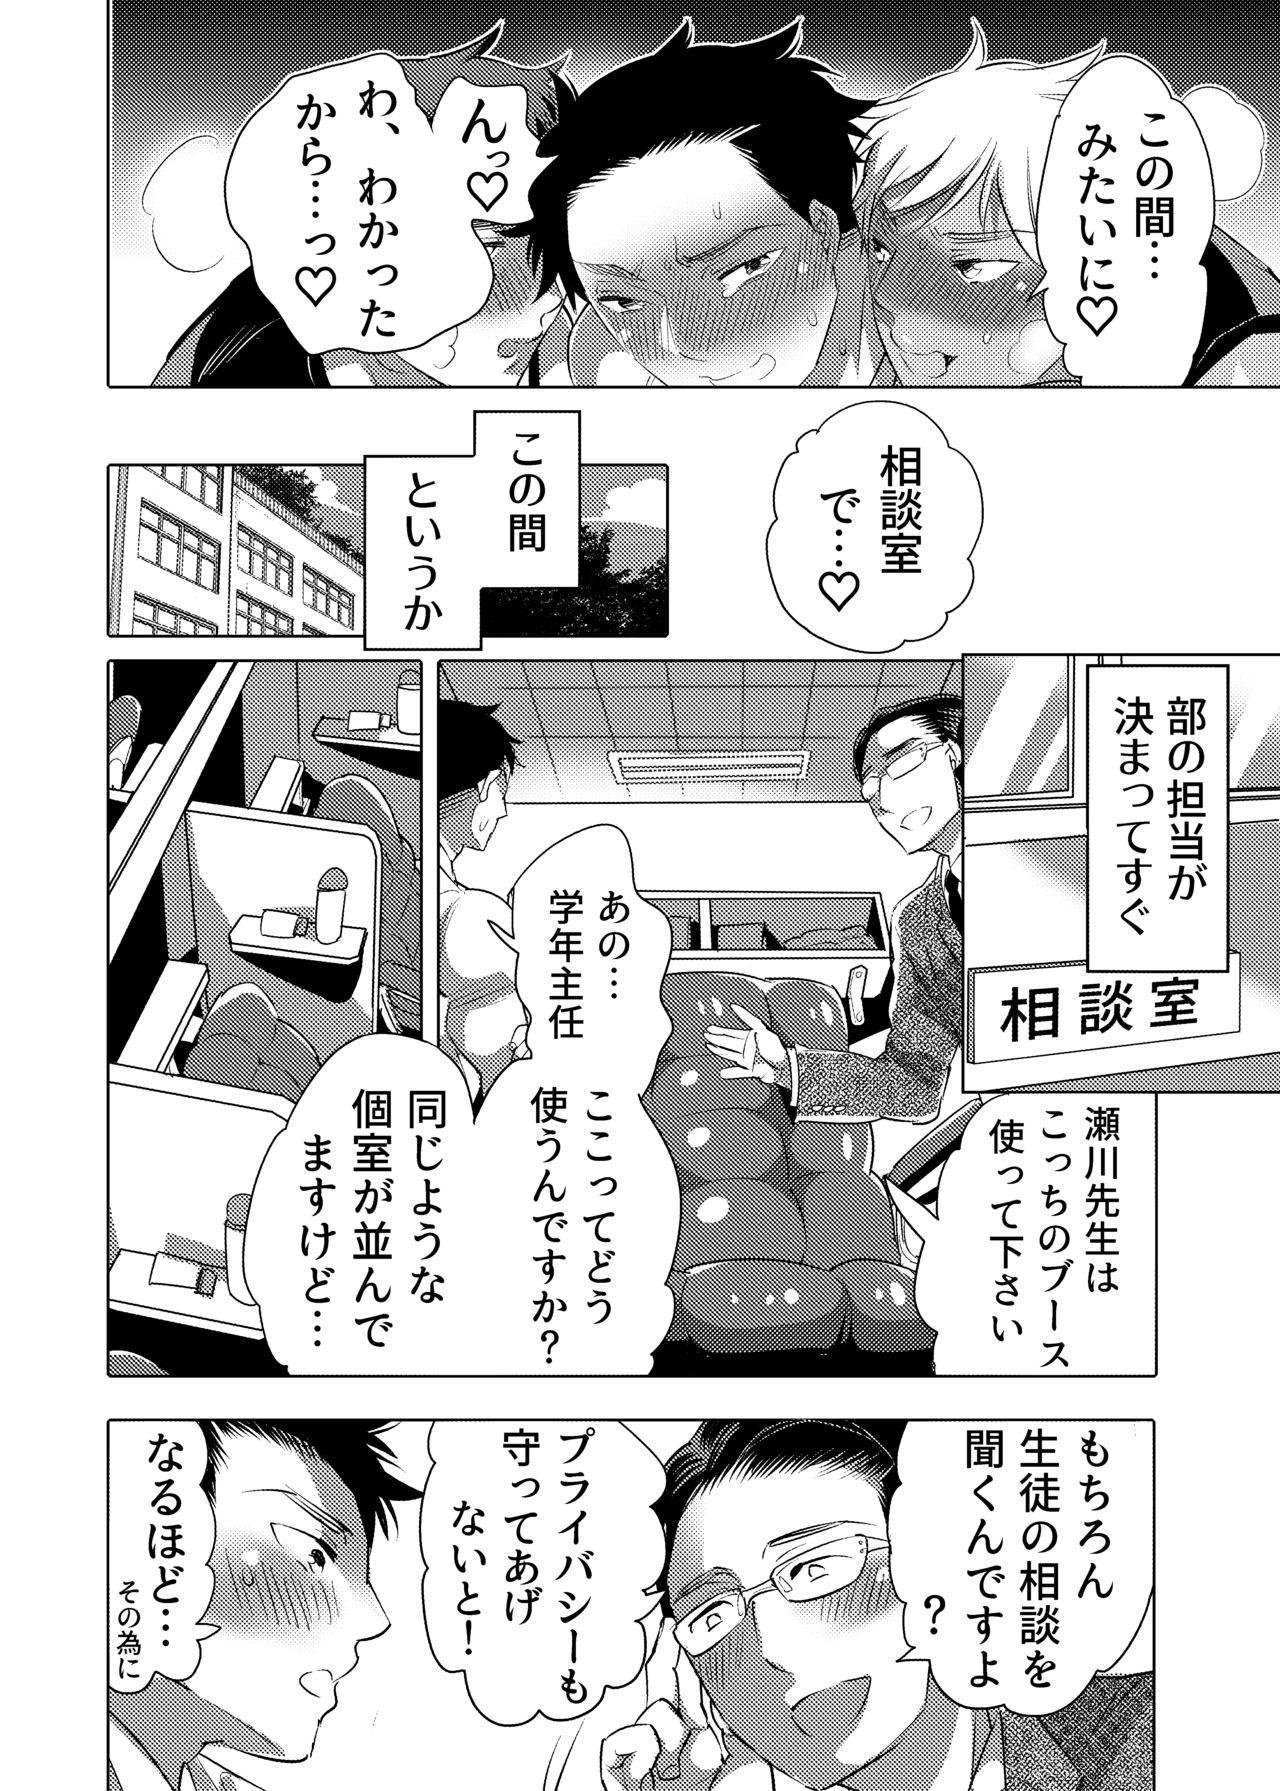 Stretch Choroochi Dekapai Sensei Spying - Page 7